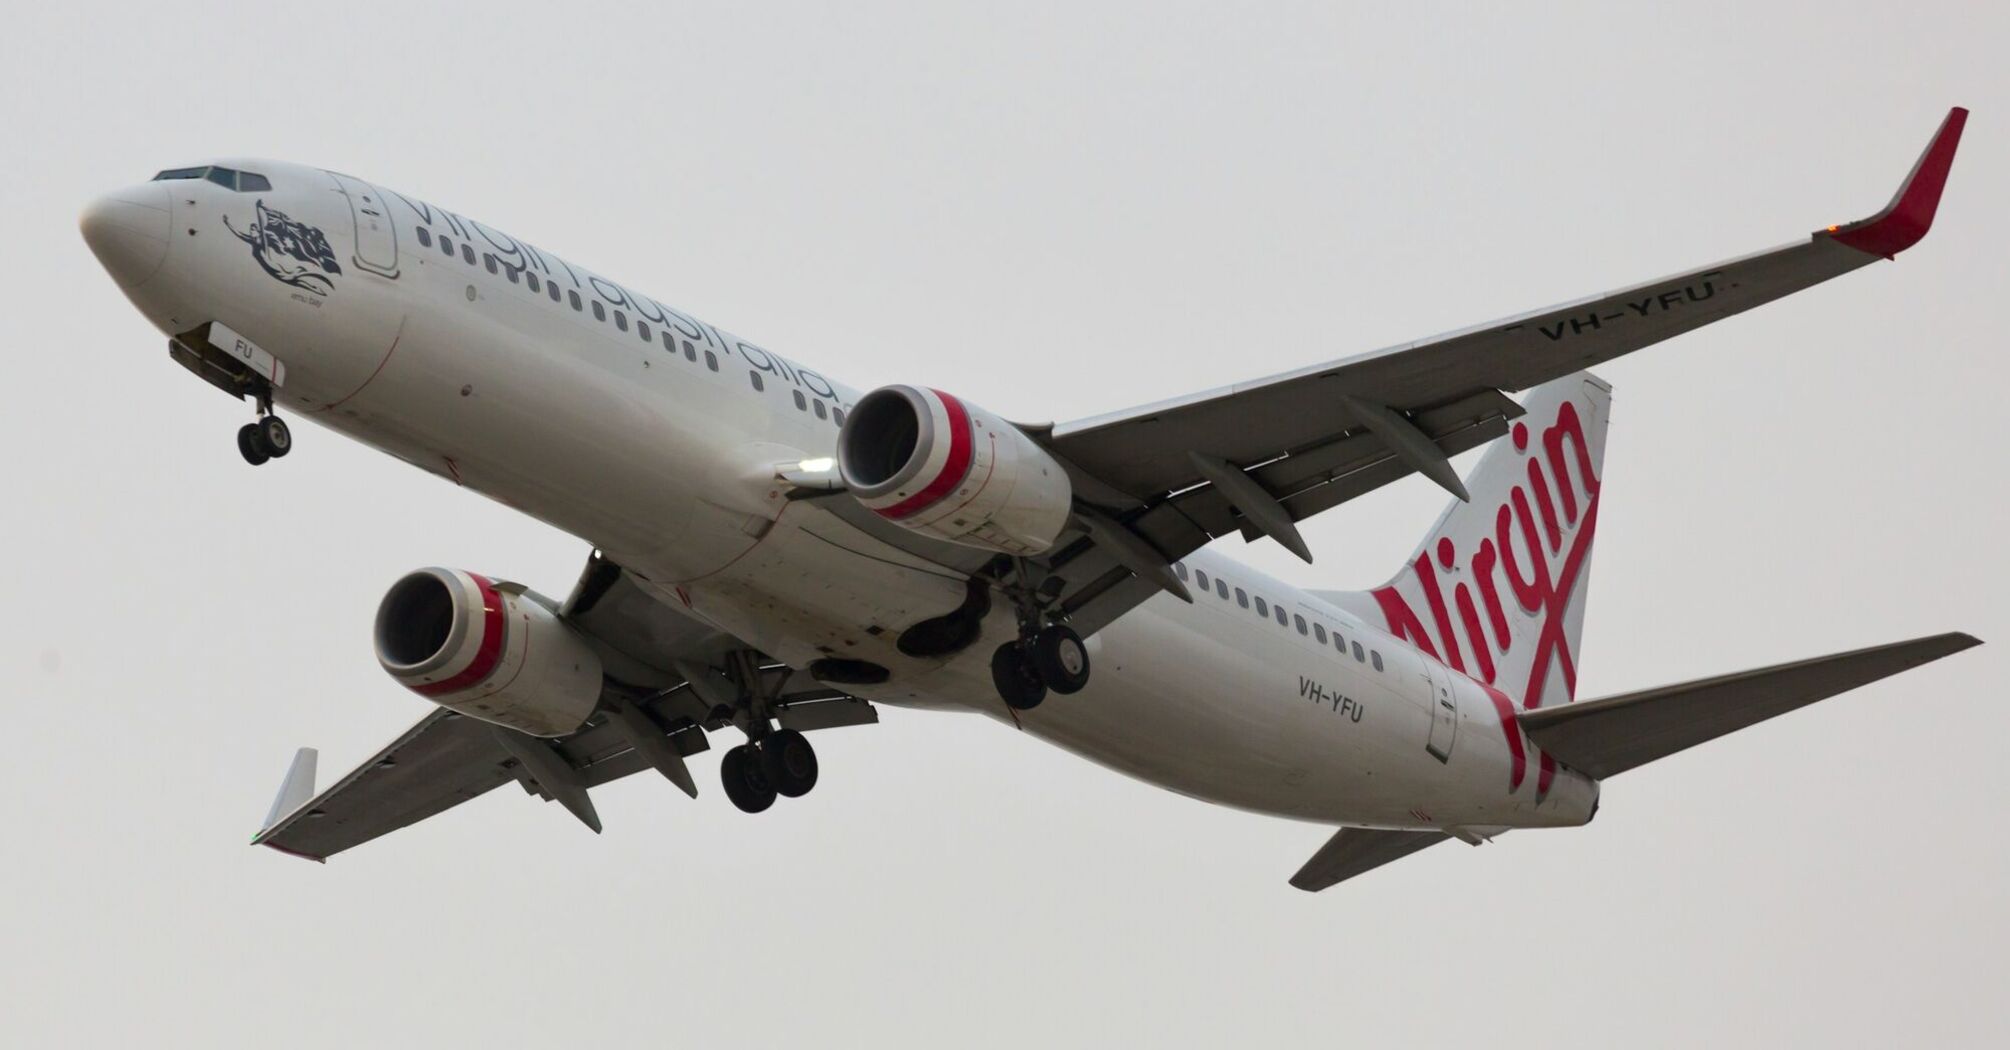 Virgin Australia Boeing 737-800 in flight